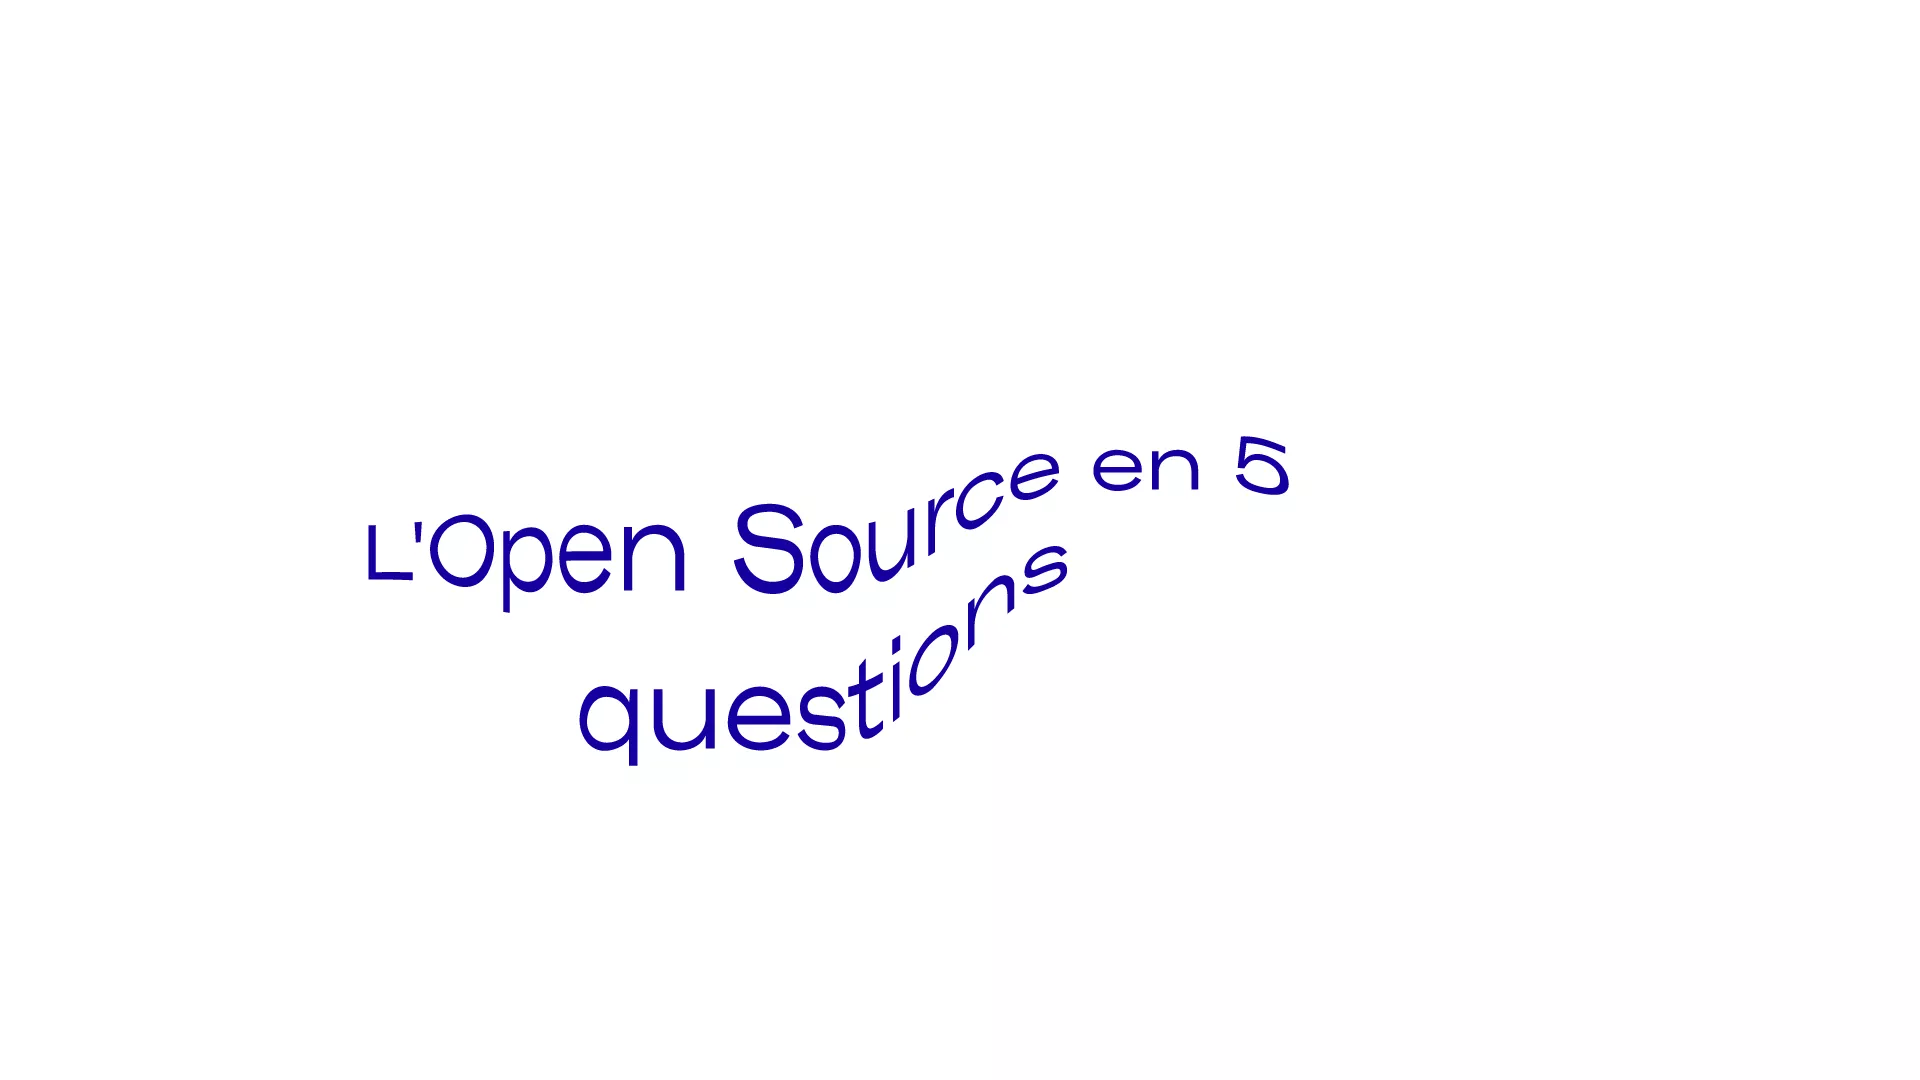 L'Open Source en 5 questions